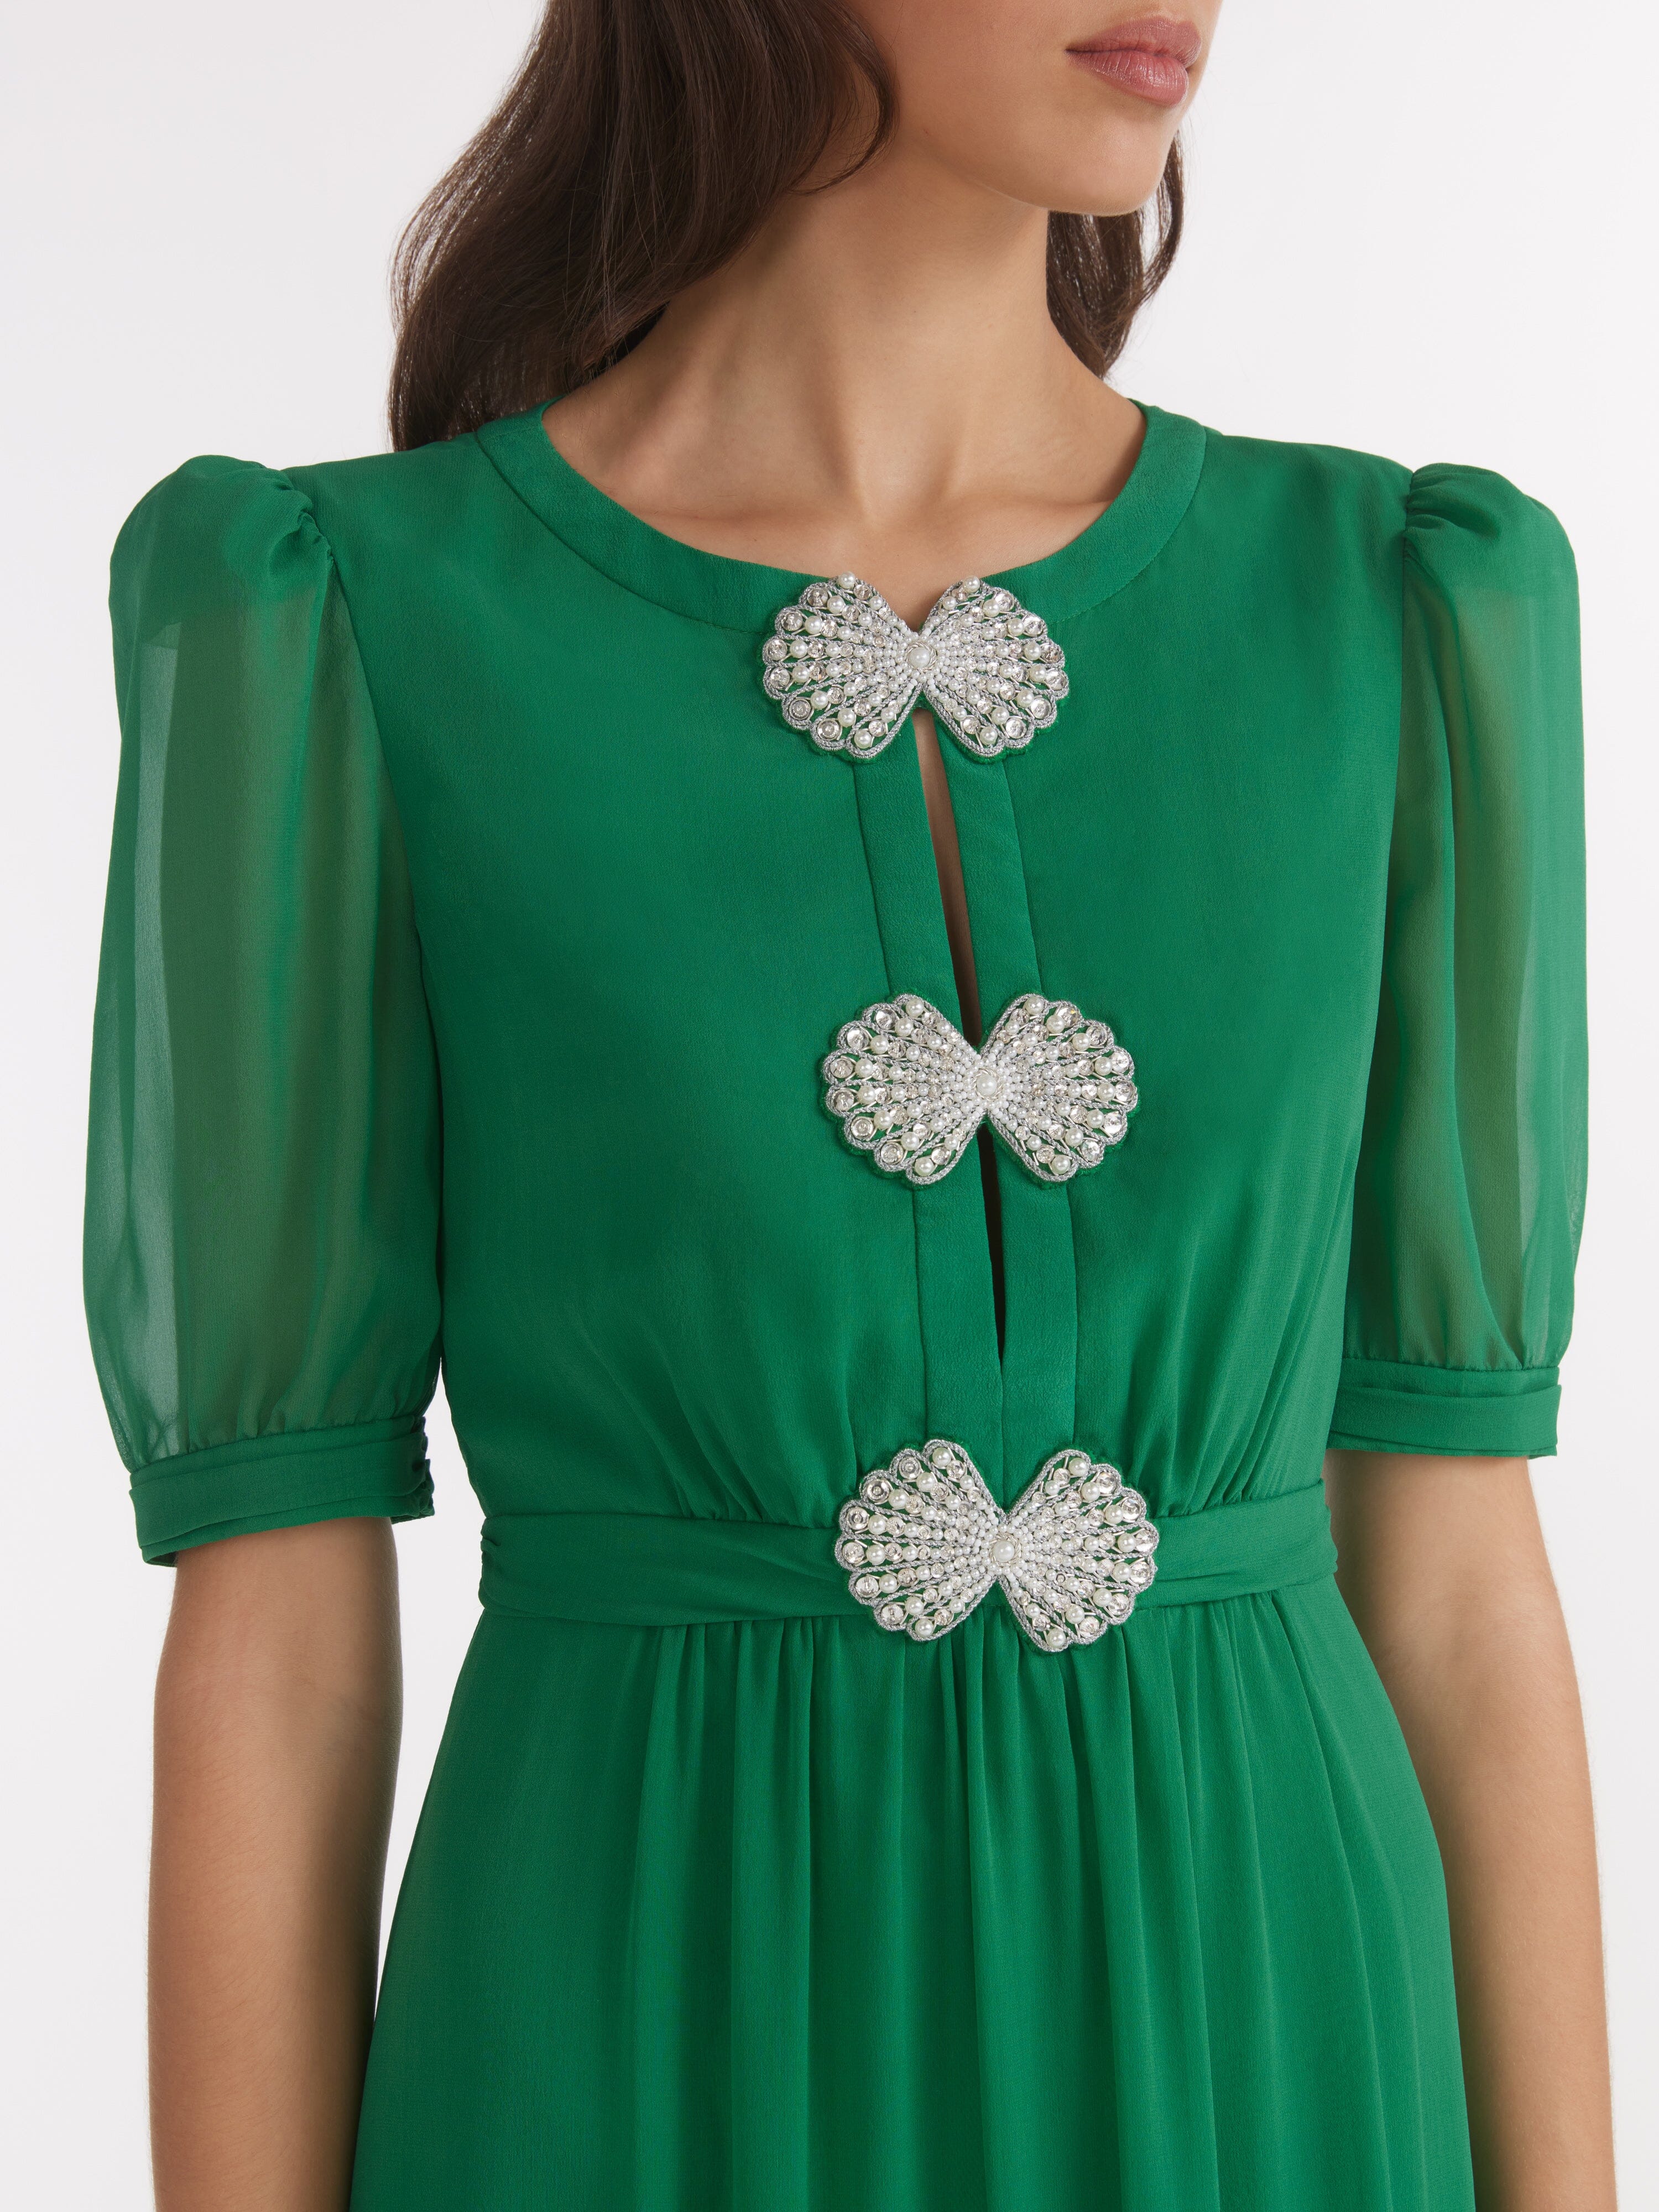 Jamie Dress in Emerald Green